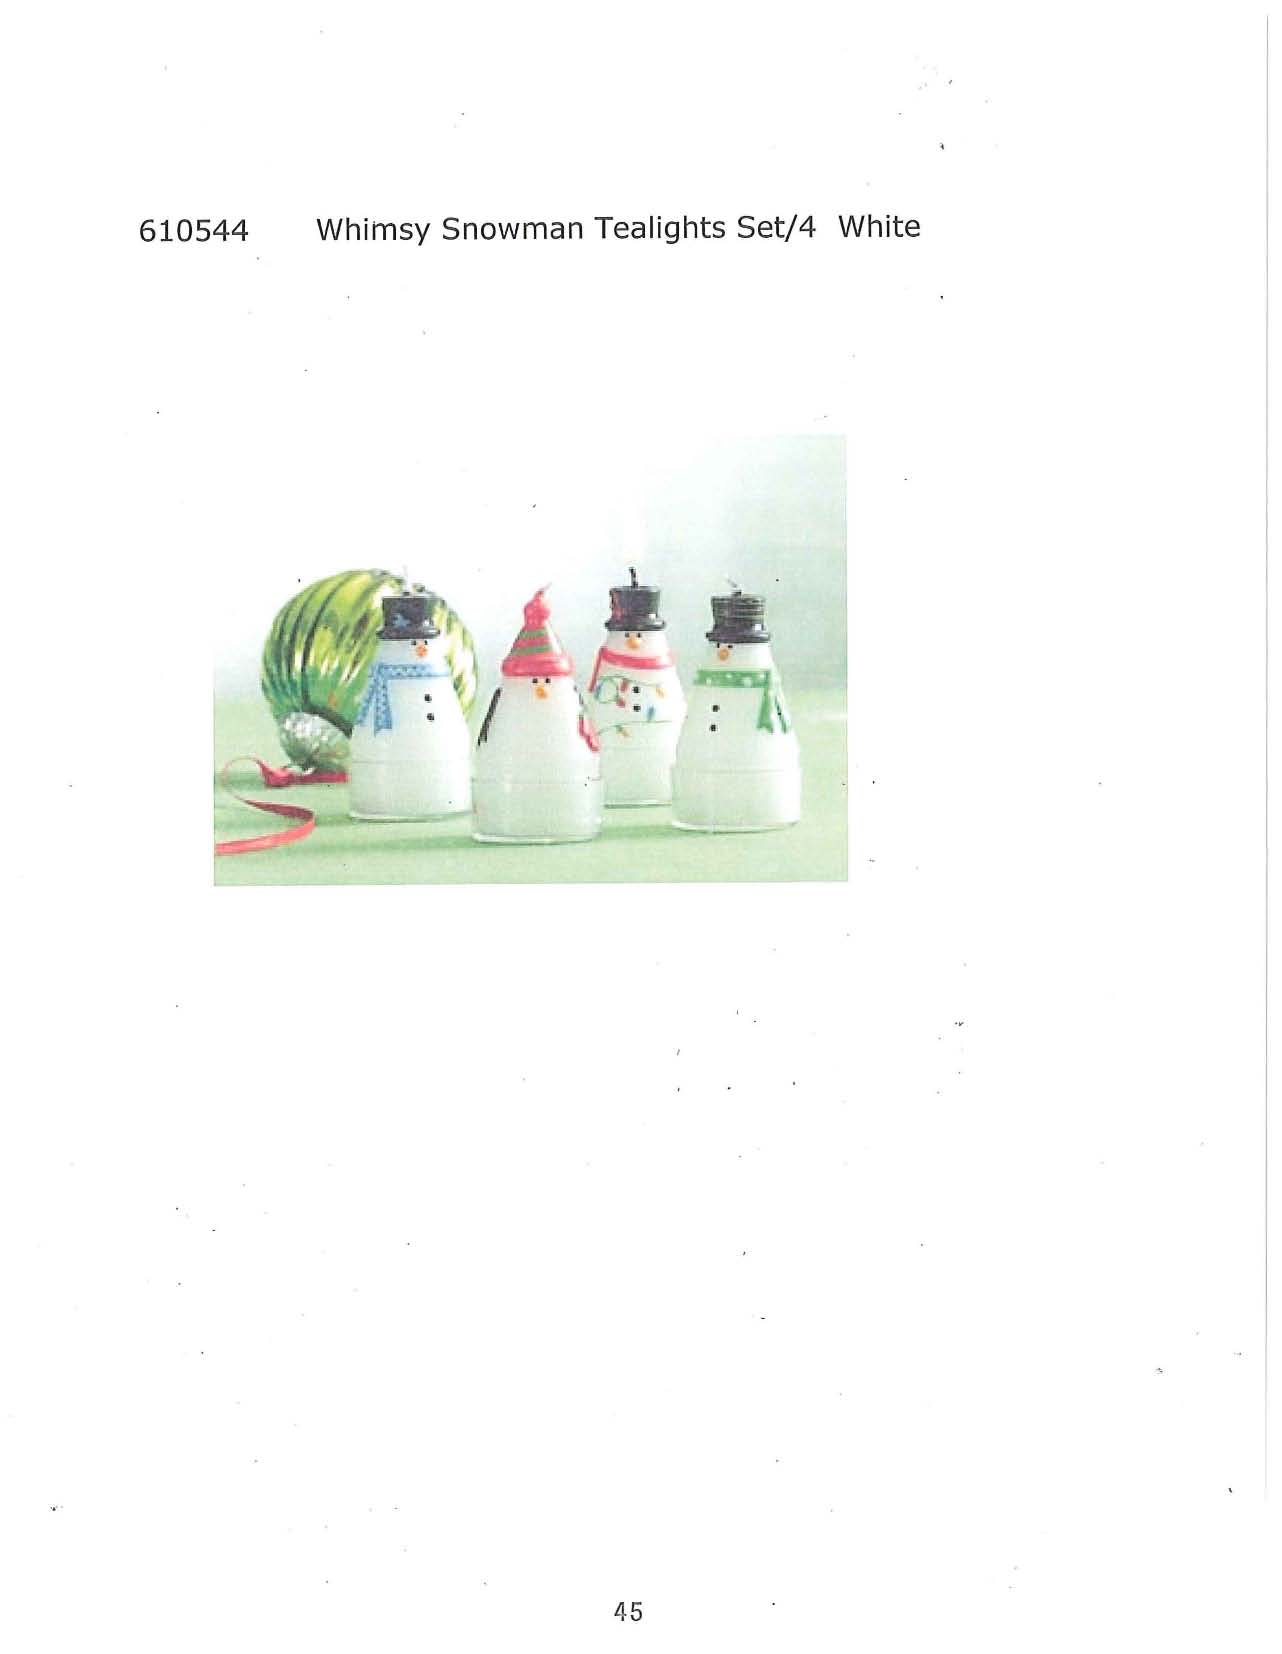 Whimsy Snowman Tealights set/4 - White